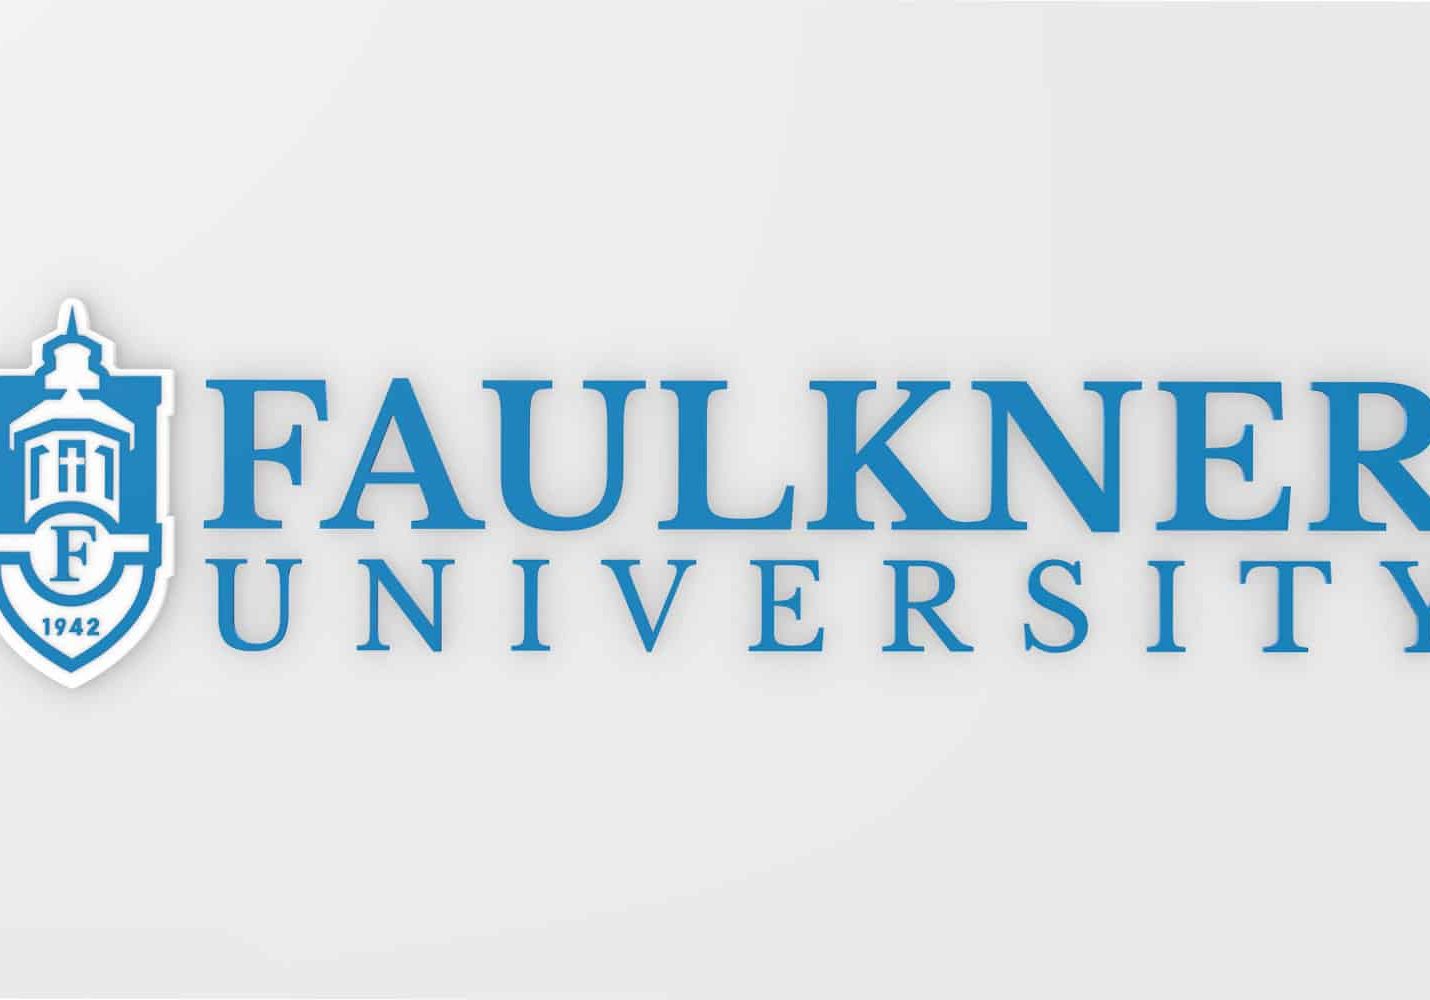 New Dual Enrollment Program At Faulkner